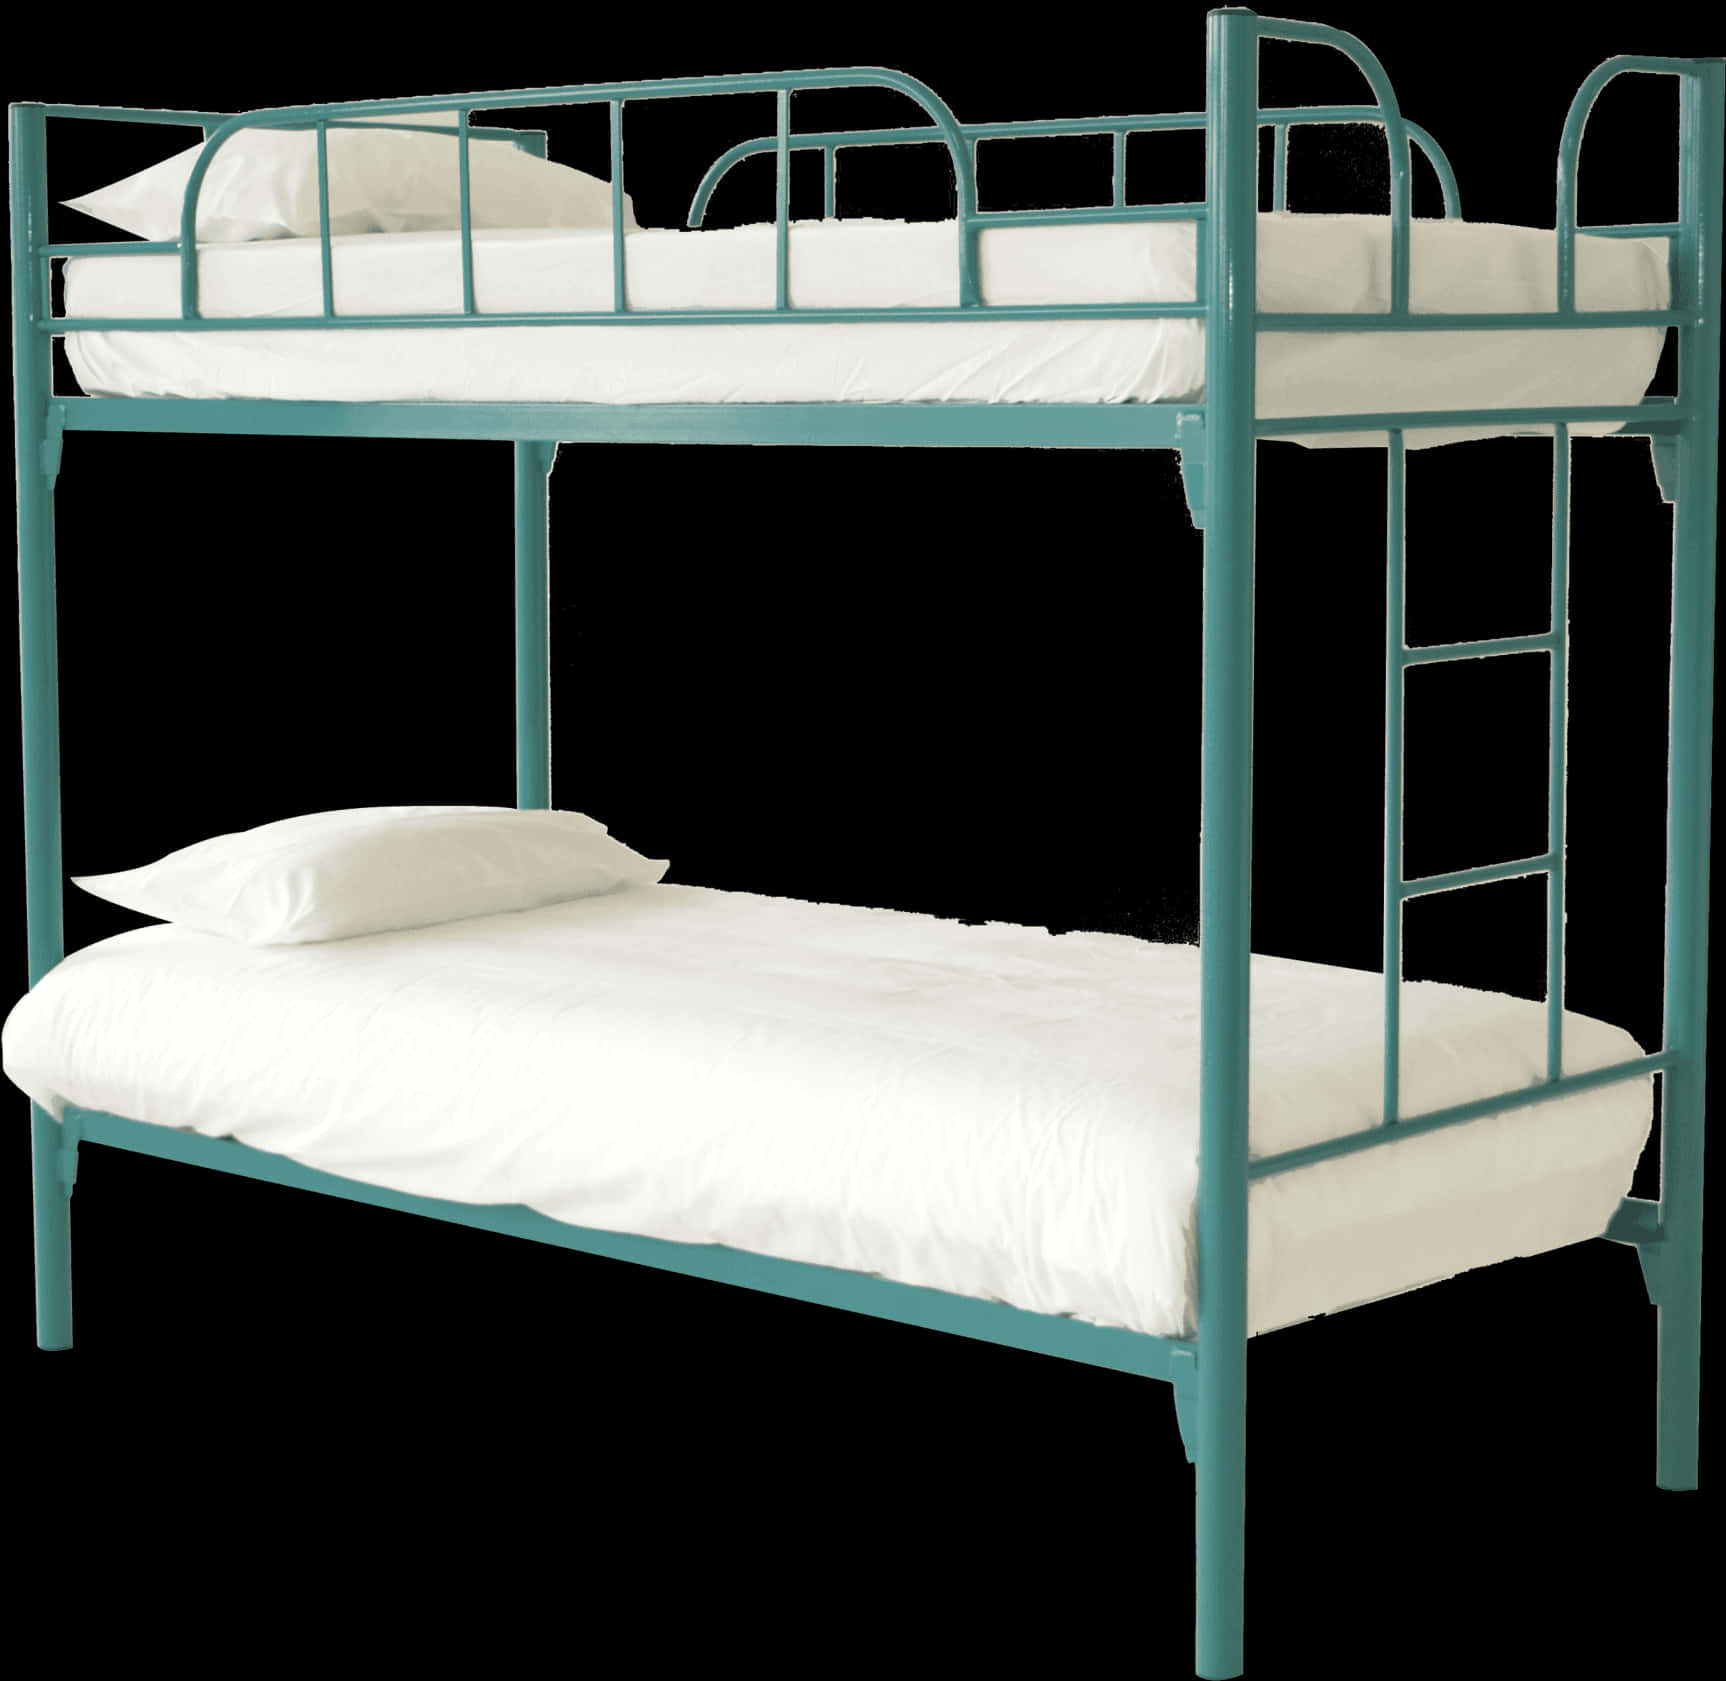 Blue Metal Bunk Bed PNG image